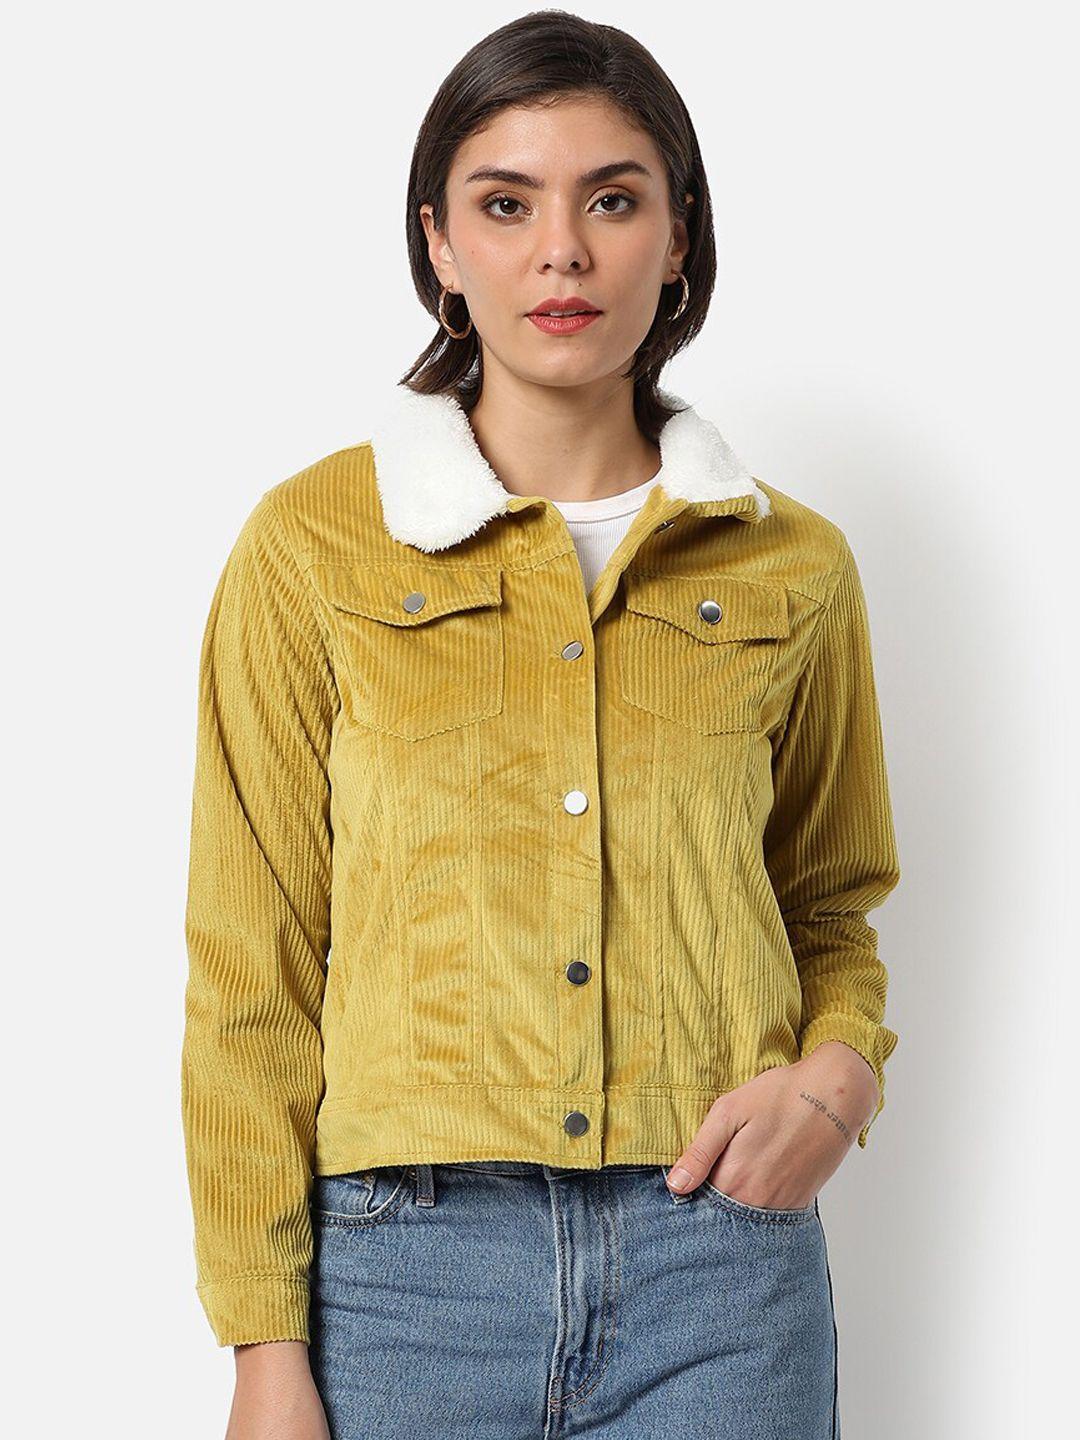 campus sutra women's mustard corduroy regular fit utility jacket for winter wear